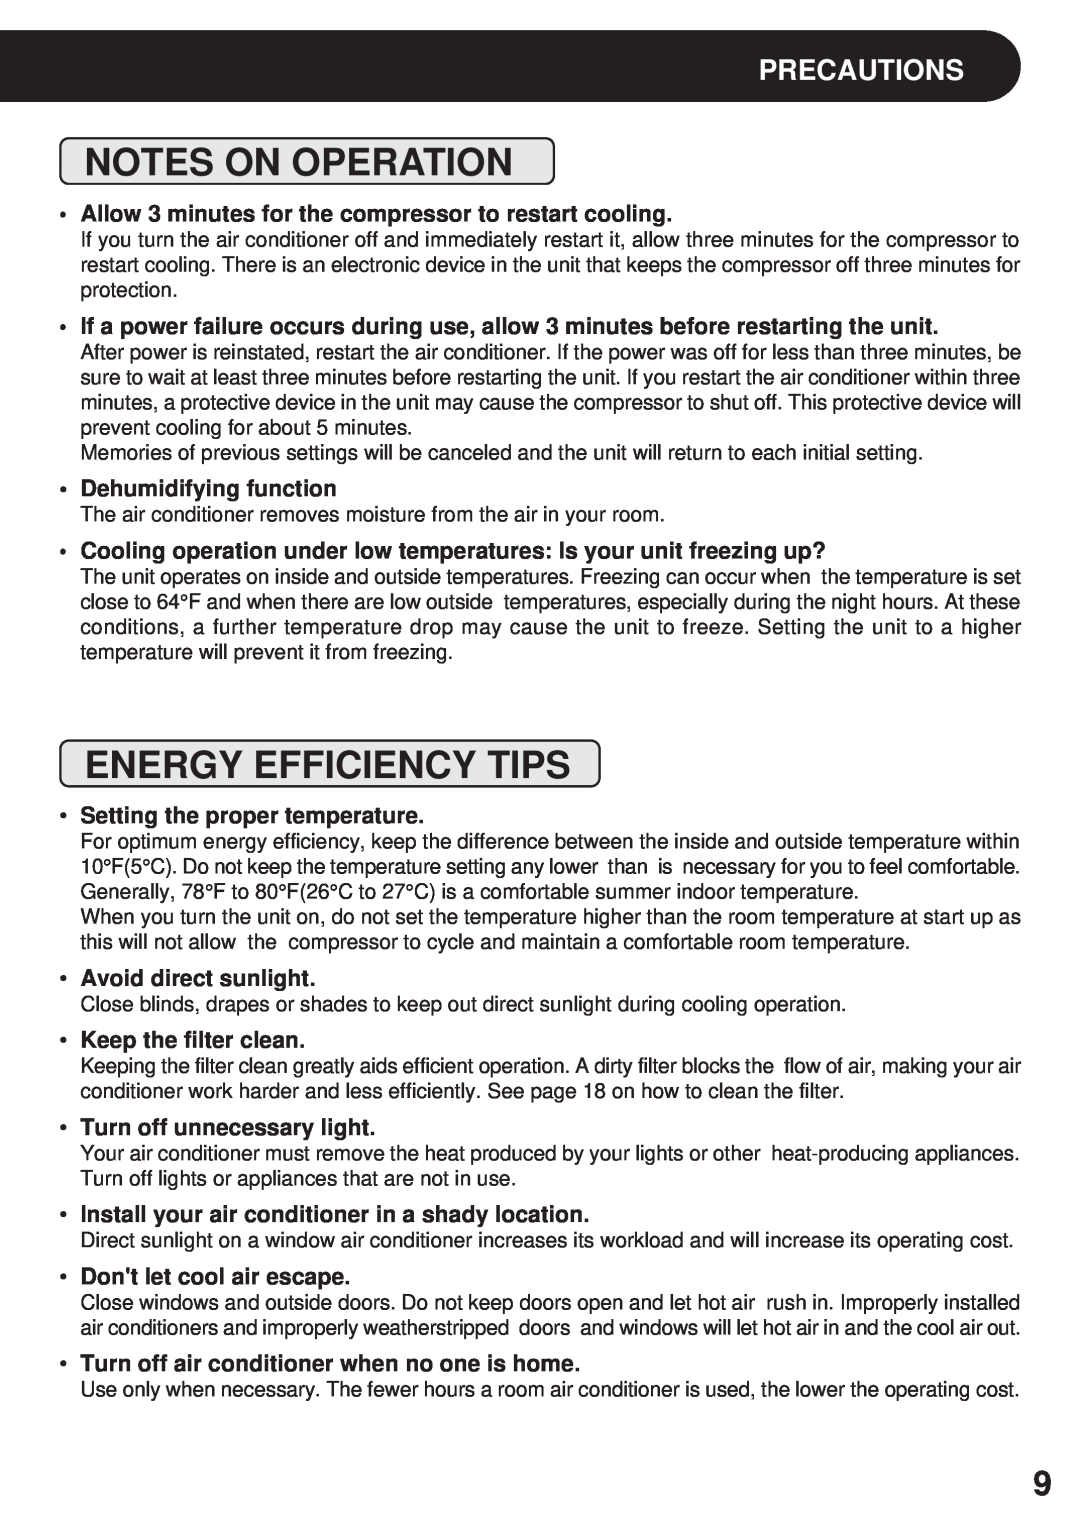 Sharp AF-R80CX, AF-R85CX, AF-S80CX operation manual Notes On Operation, Energy Efficiency Tips, Precautions 